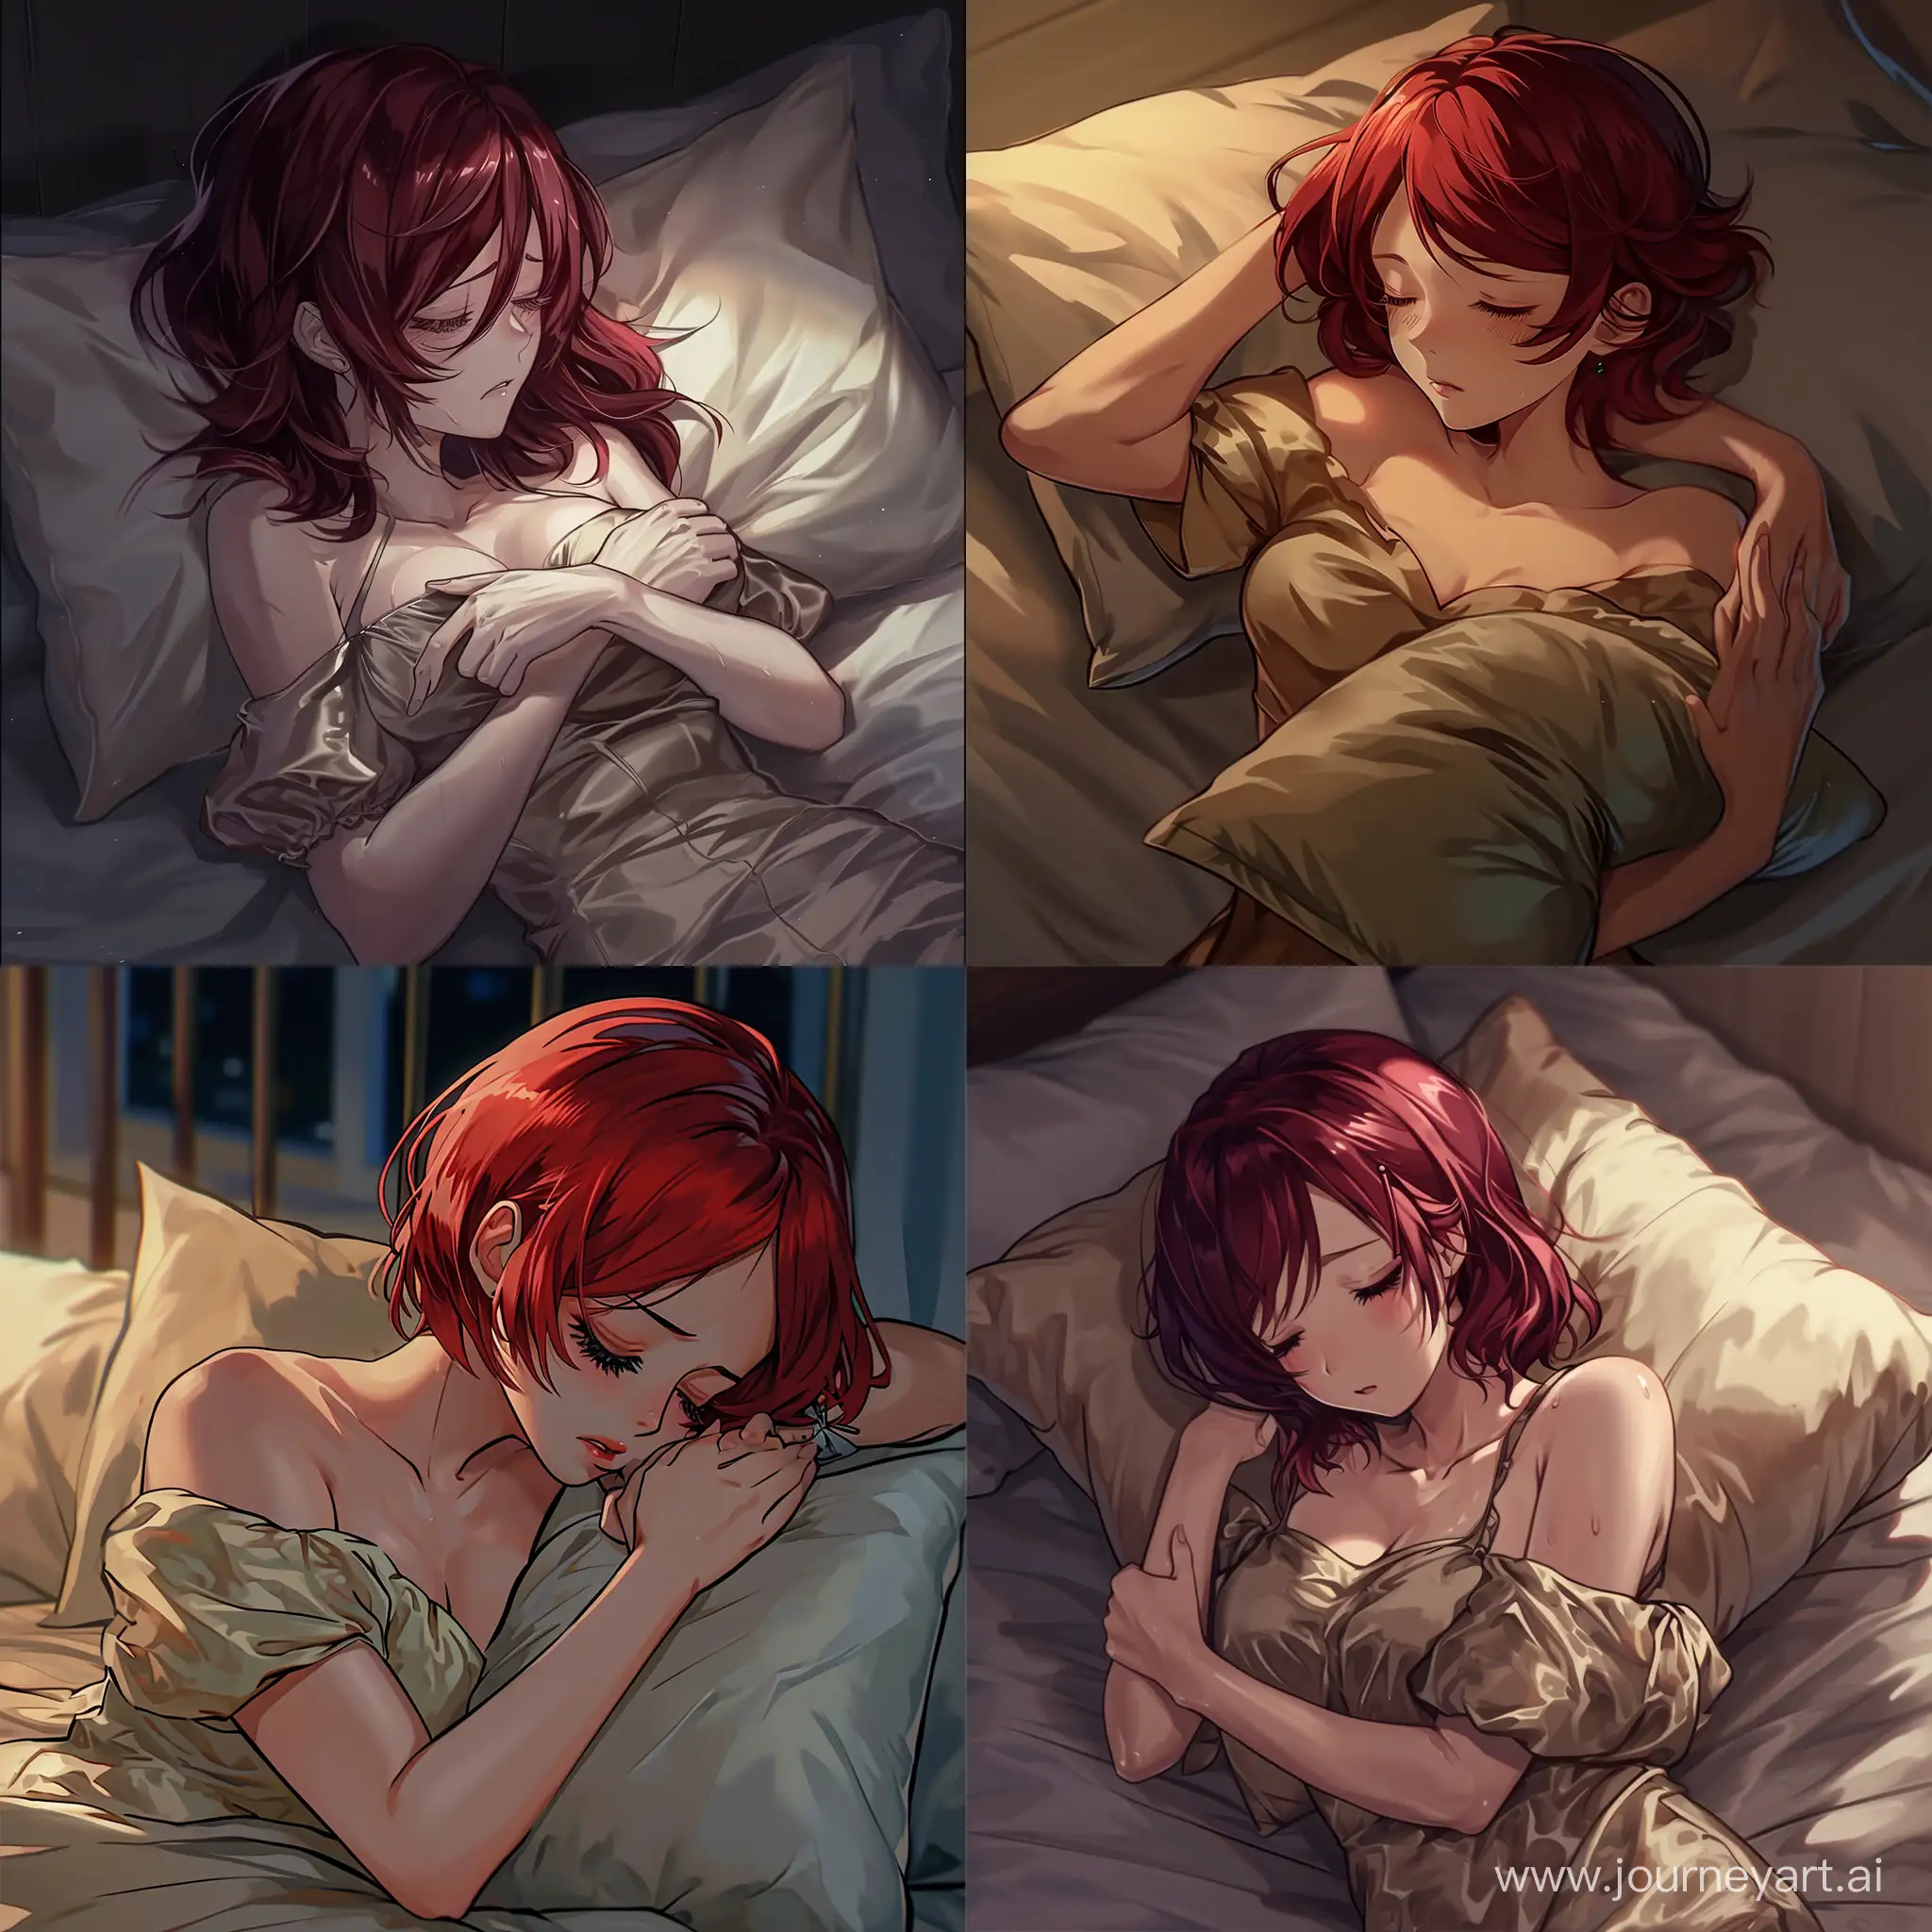 Serene-Slumber-RedHaired-Anime-Girl-Embracing-Solitude